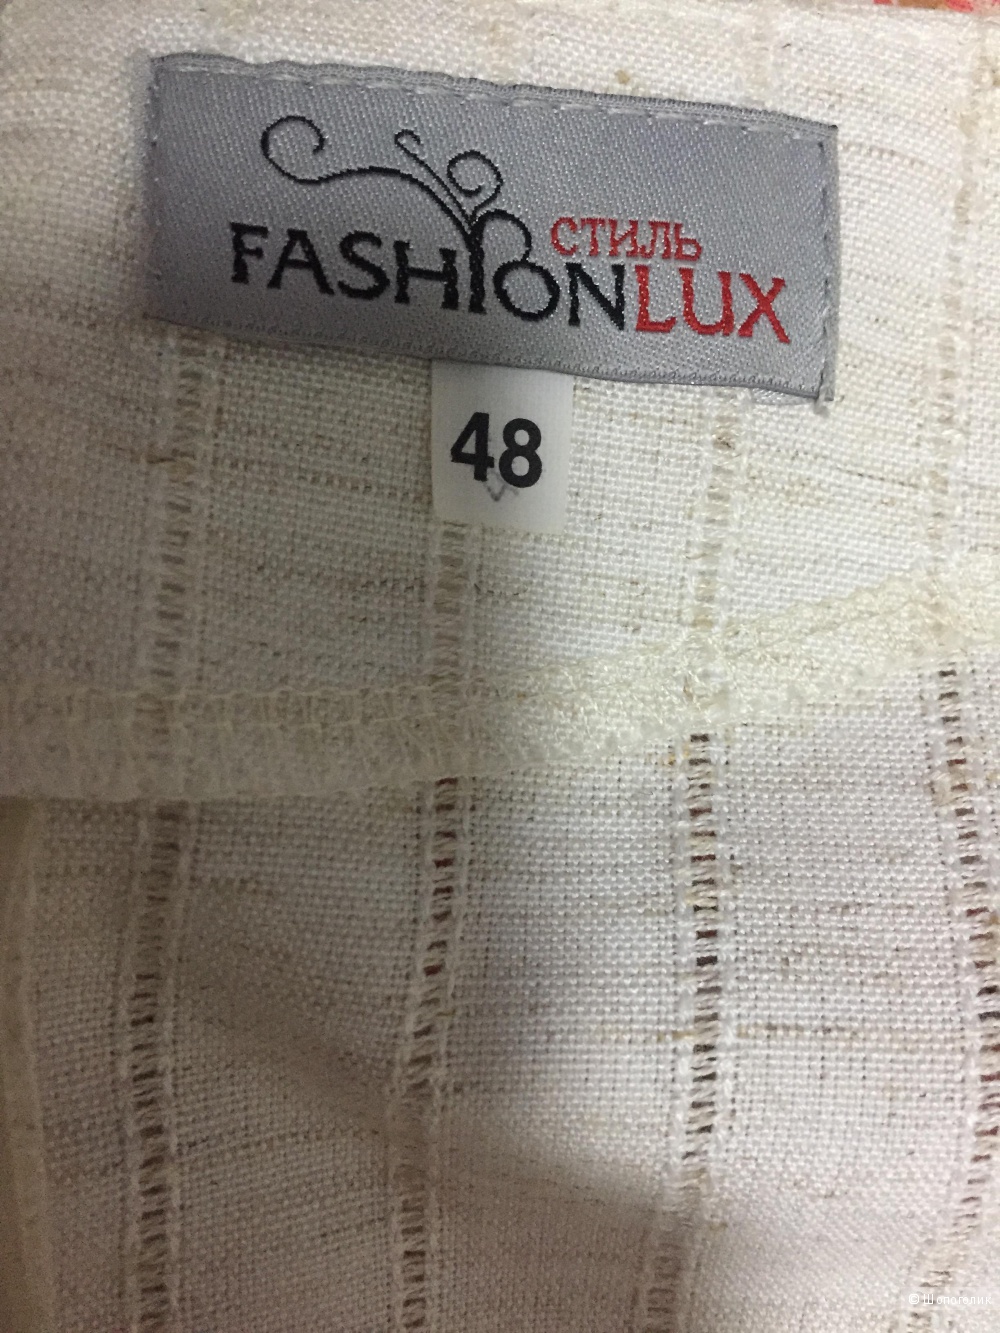 Сарафан Fashion lux 48